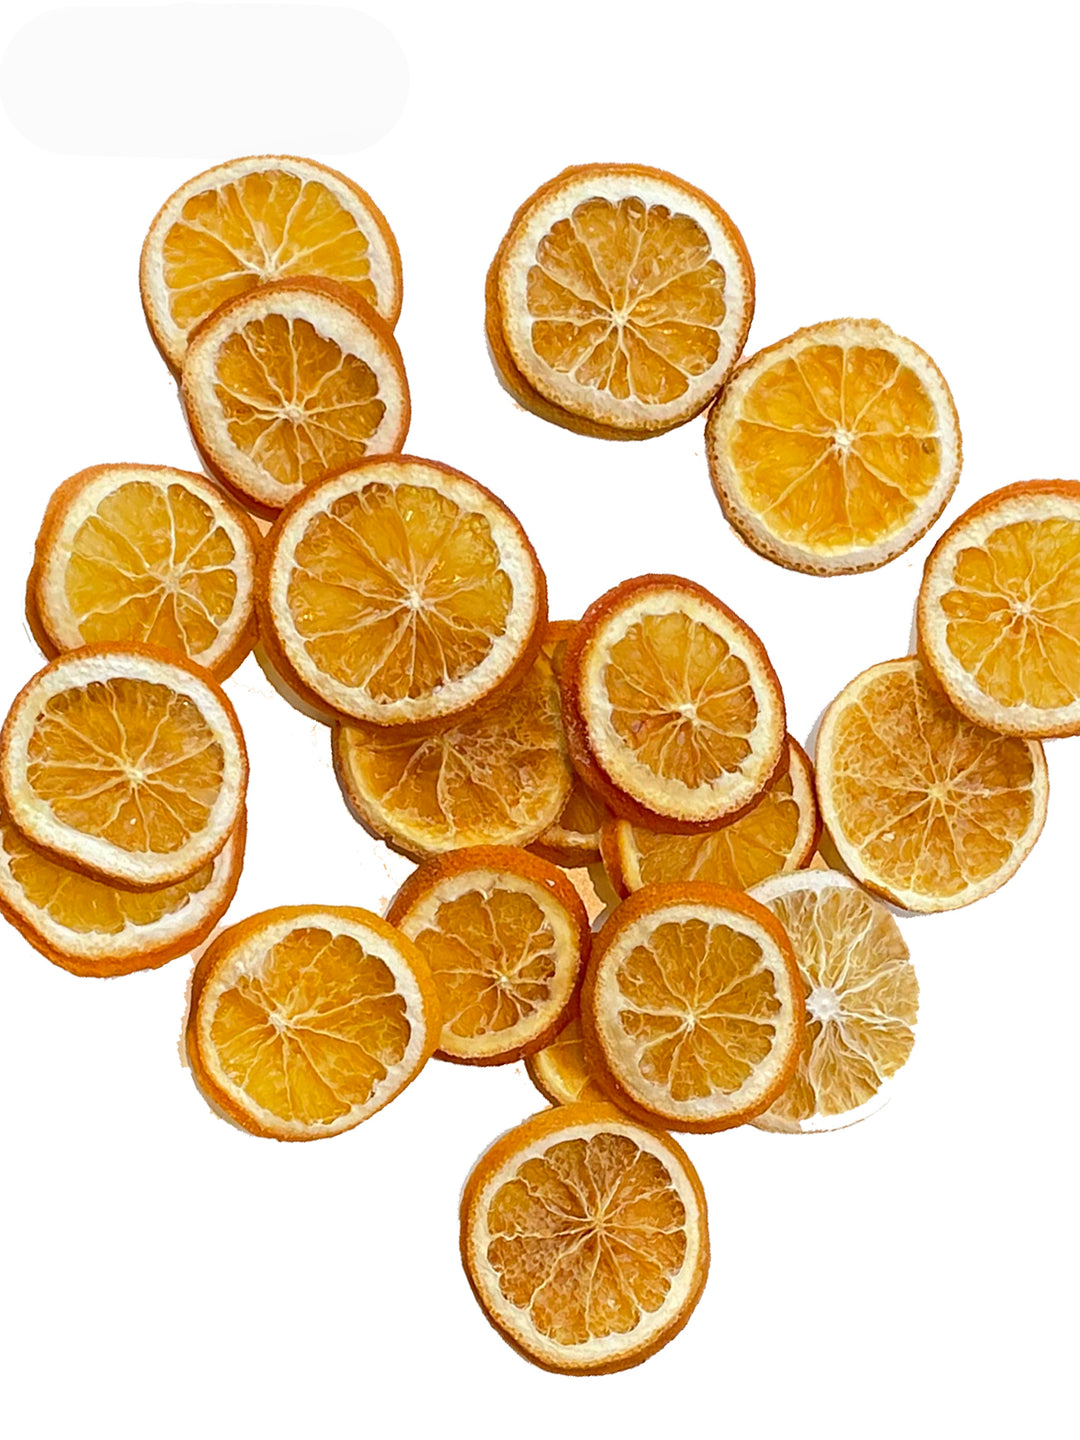 Orange slices decoration